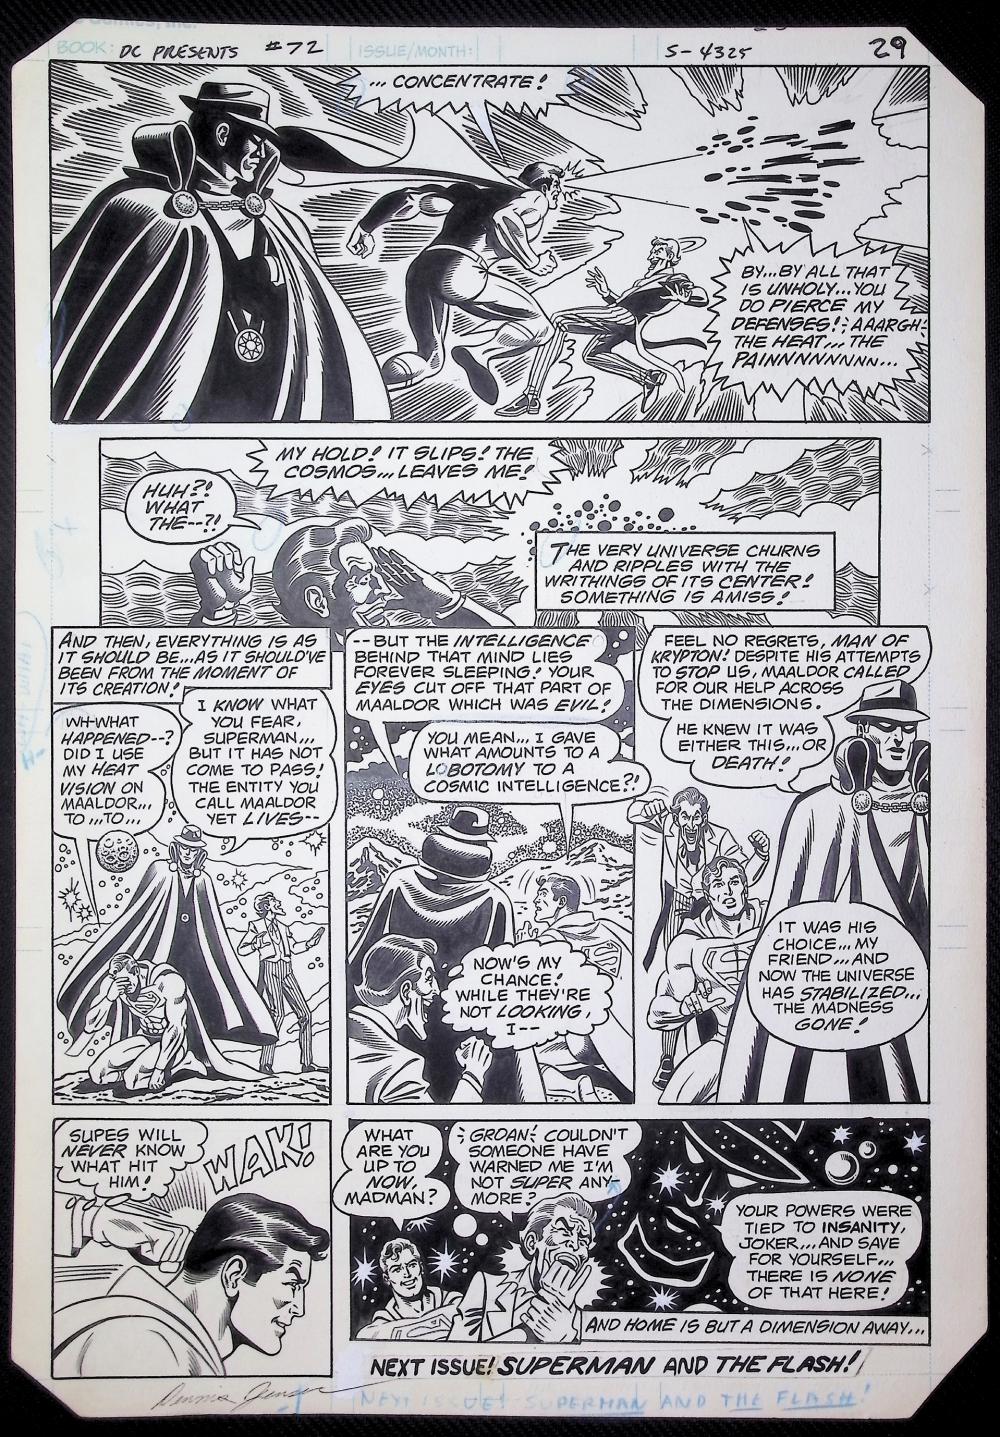 Image: DC Comics Presents #72 art by Alex Saviuk